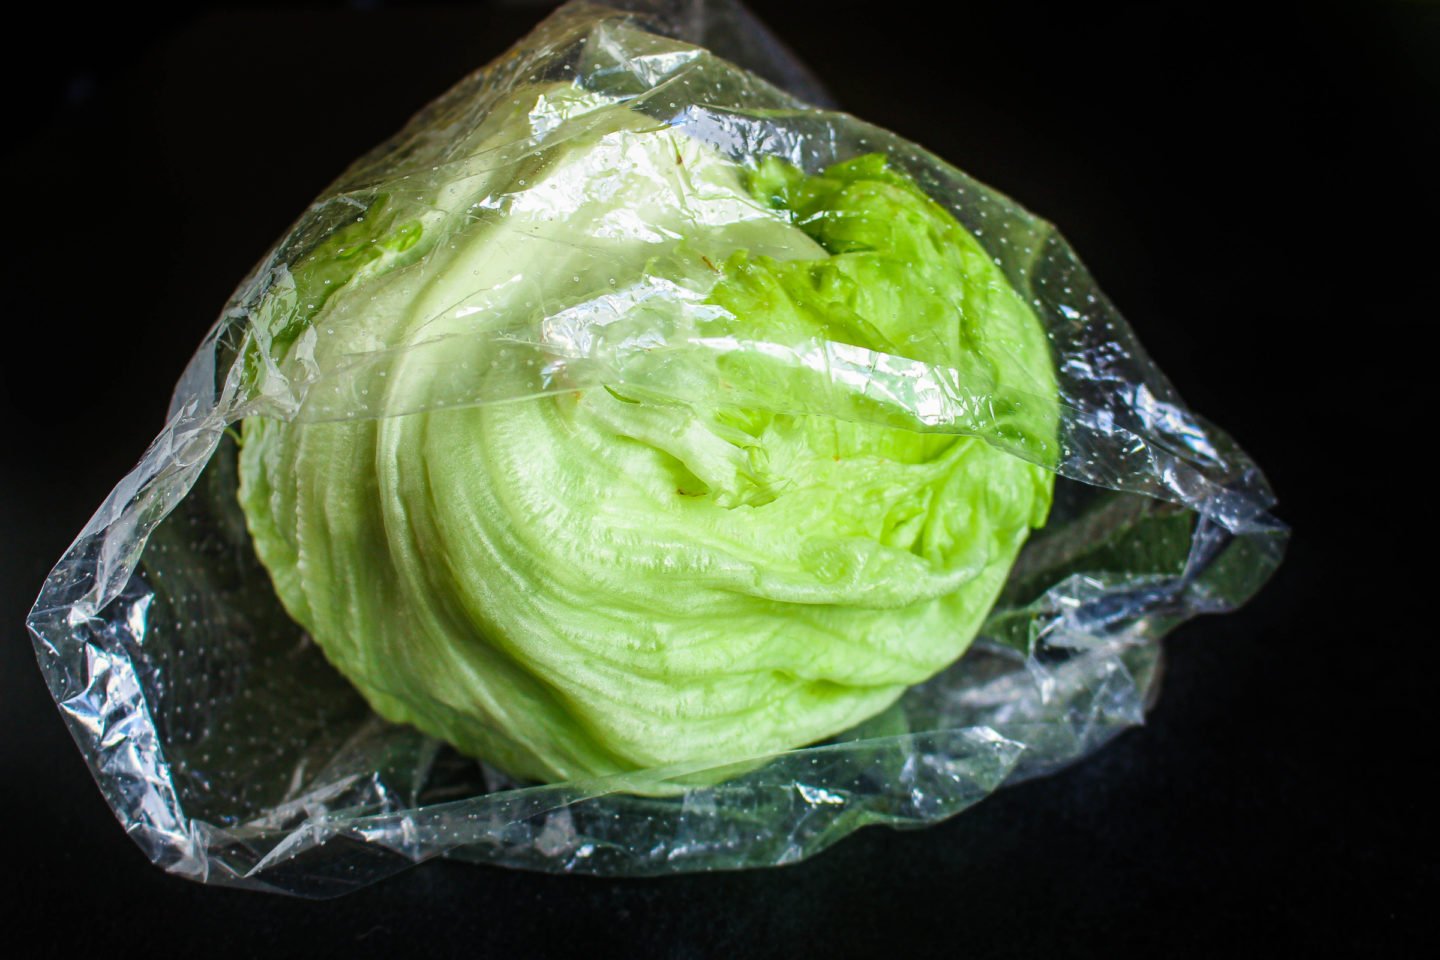 Lettuce Wrapped In Plastic